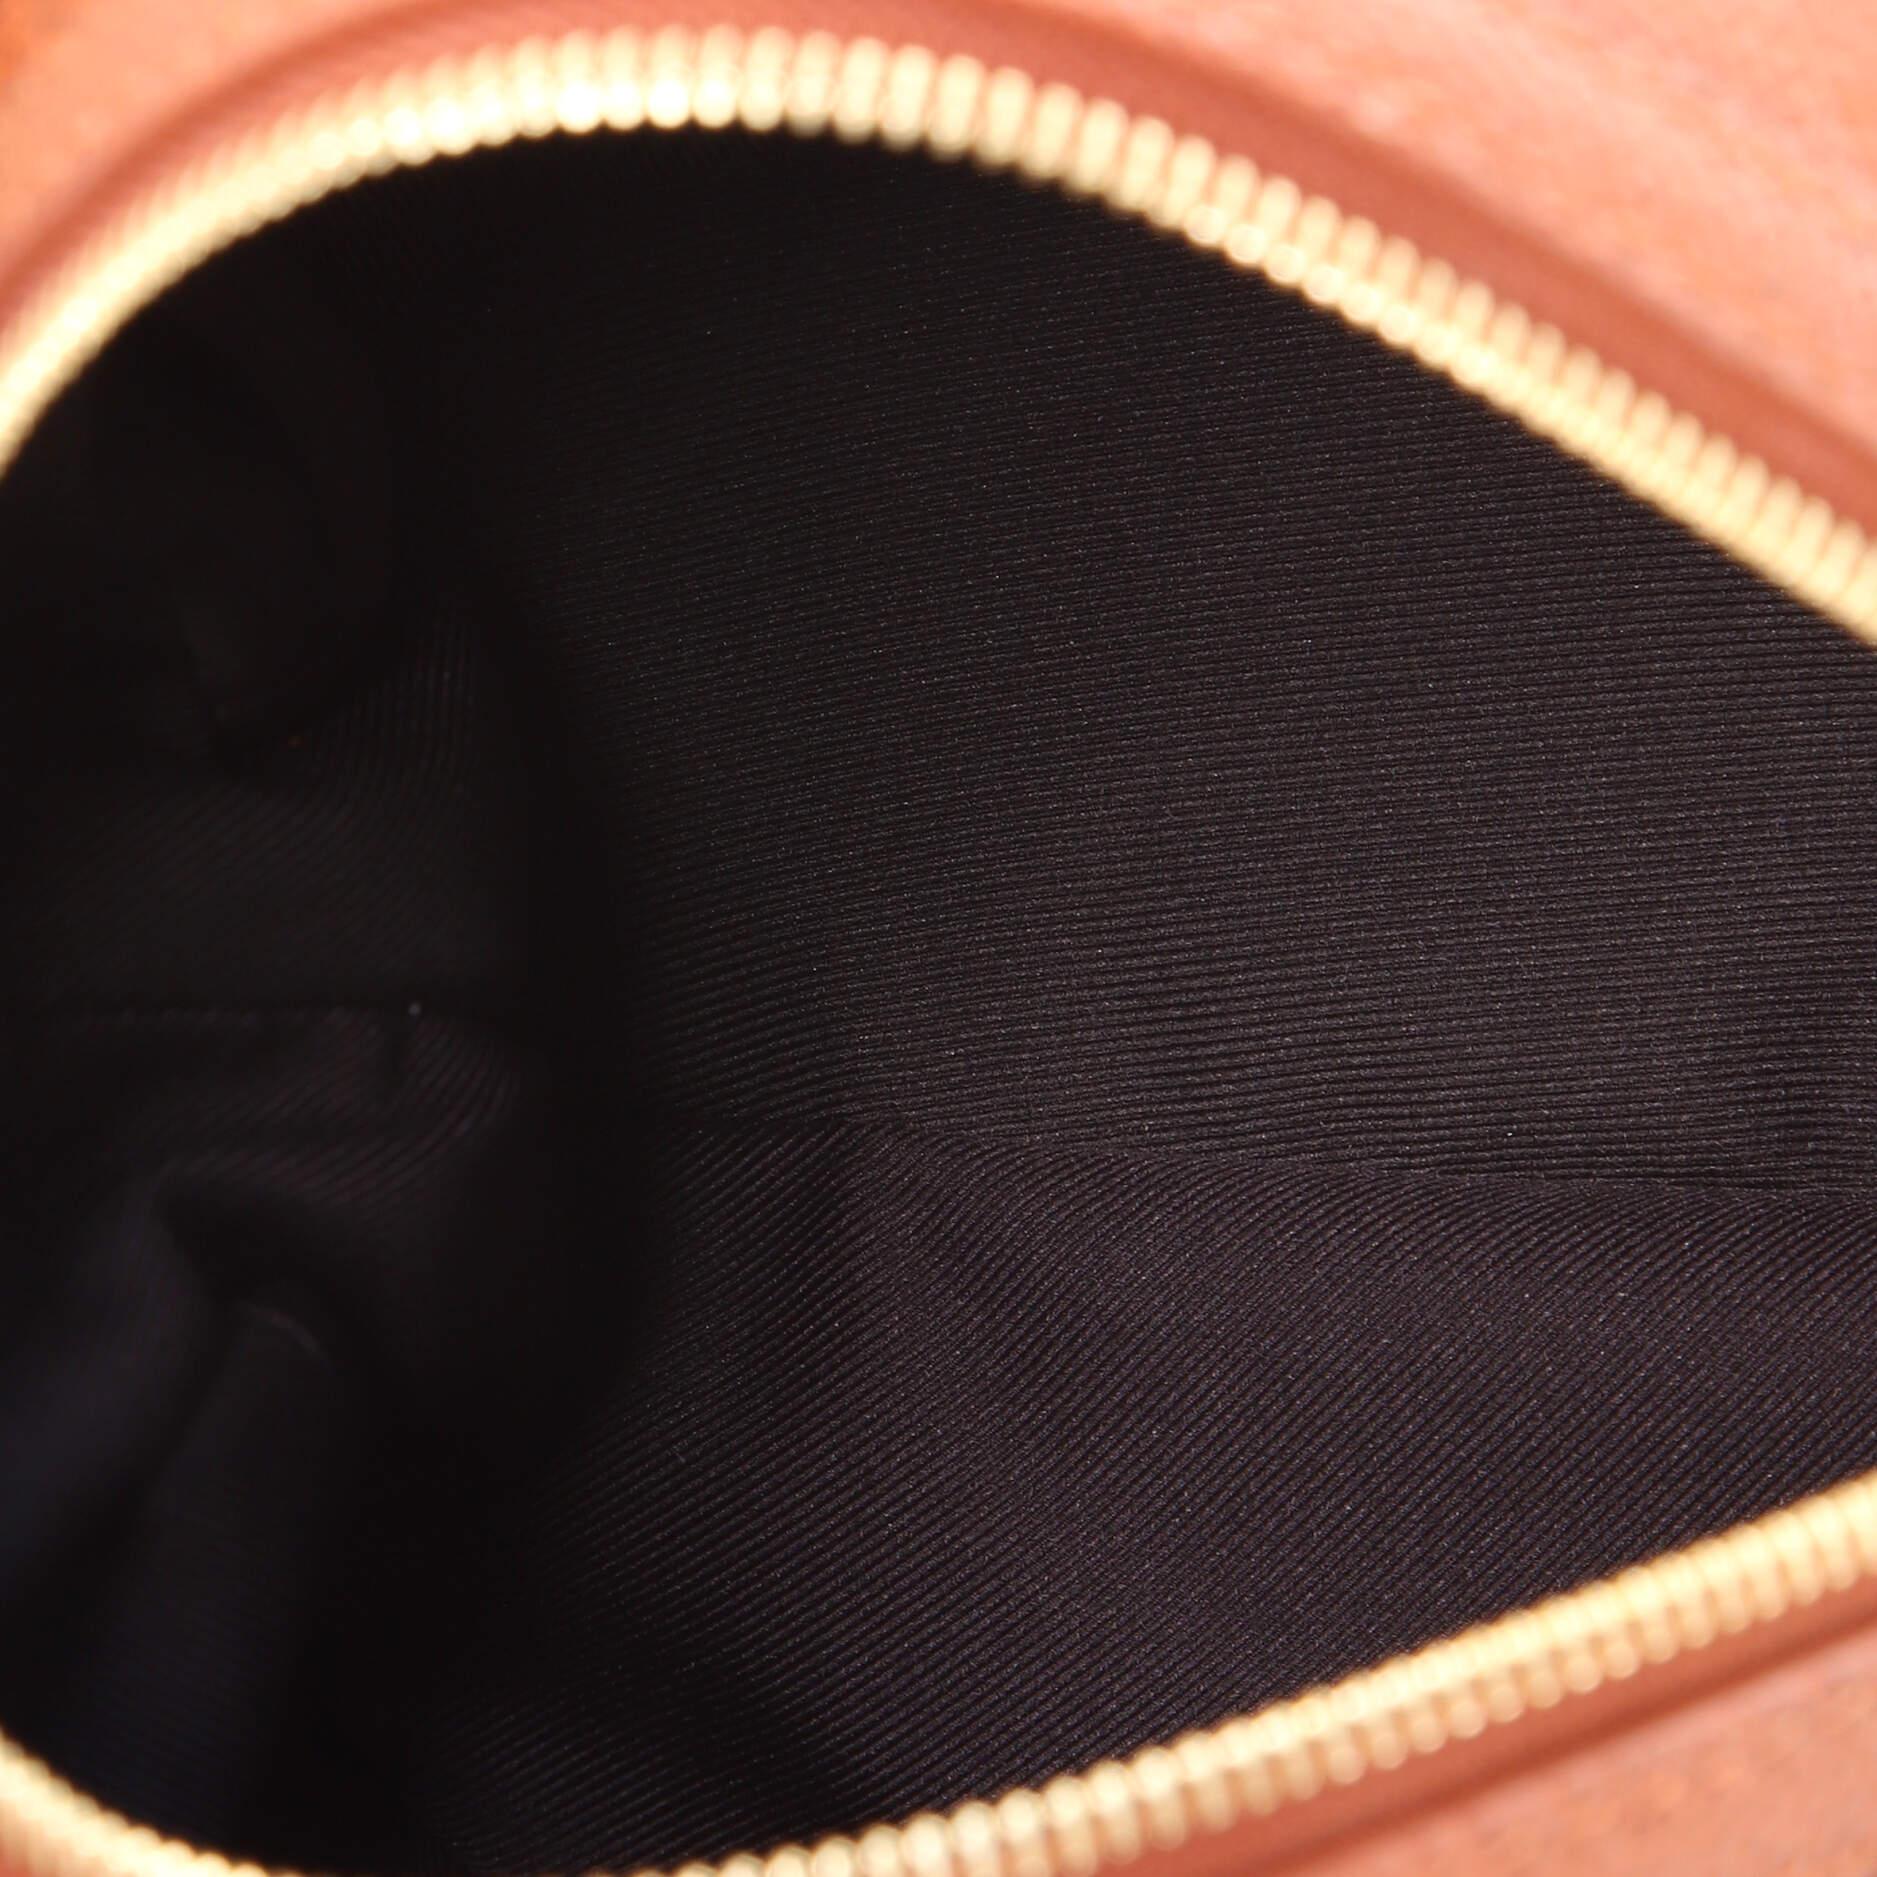 Brown Louis Vuitton LV x NBA Ball in Basket Bag Monogram Embossed Leather